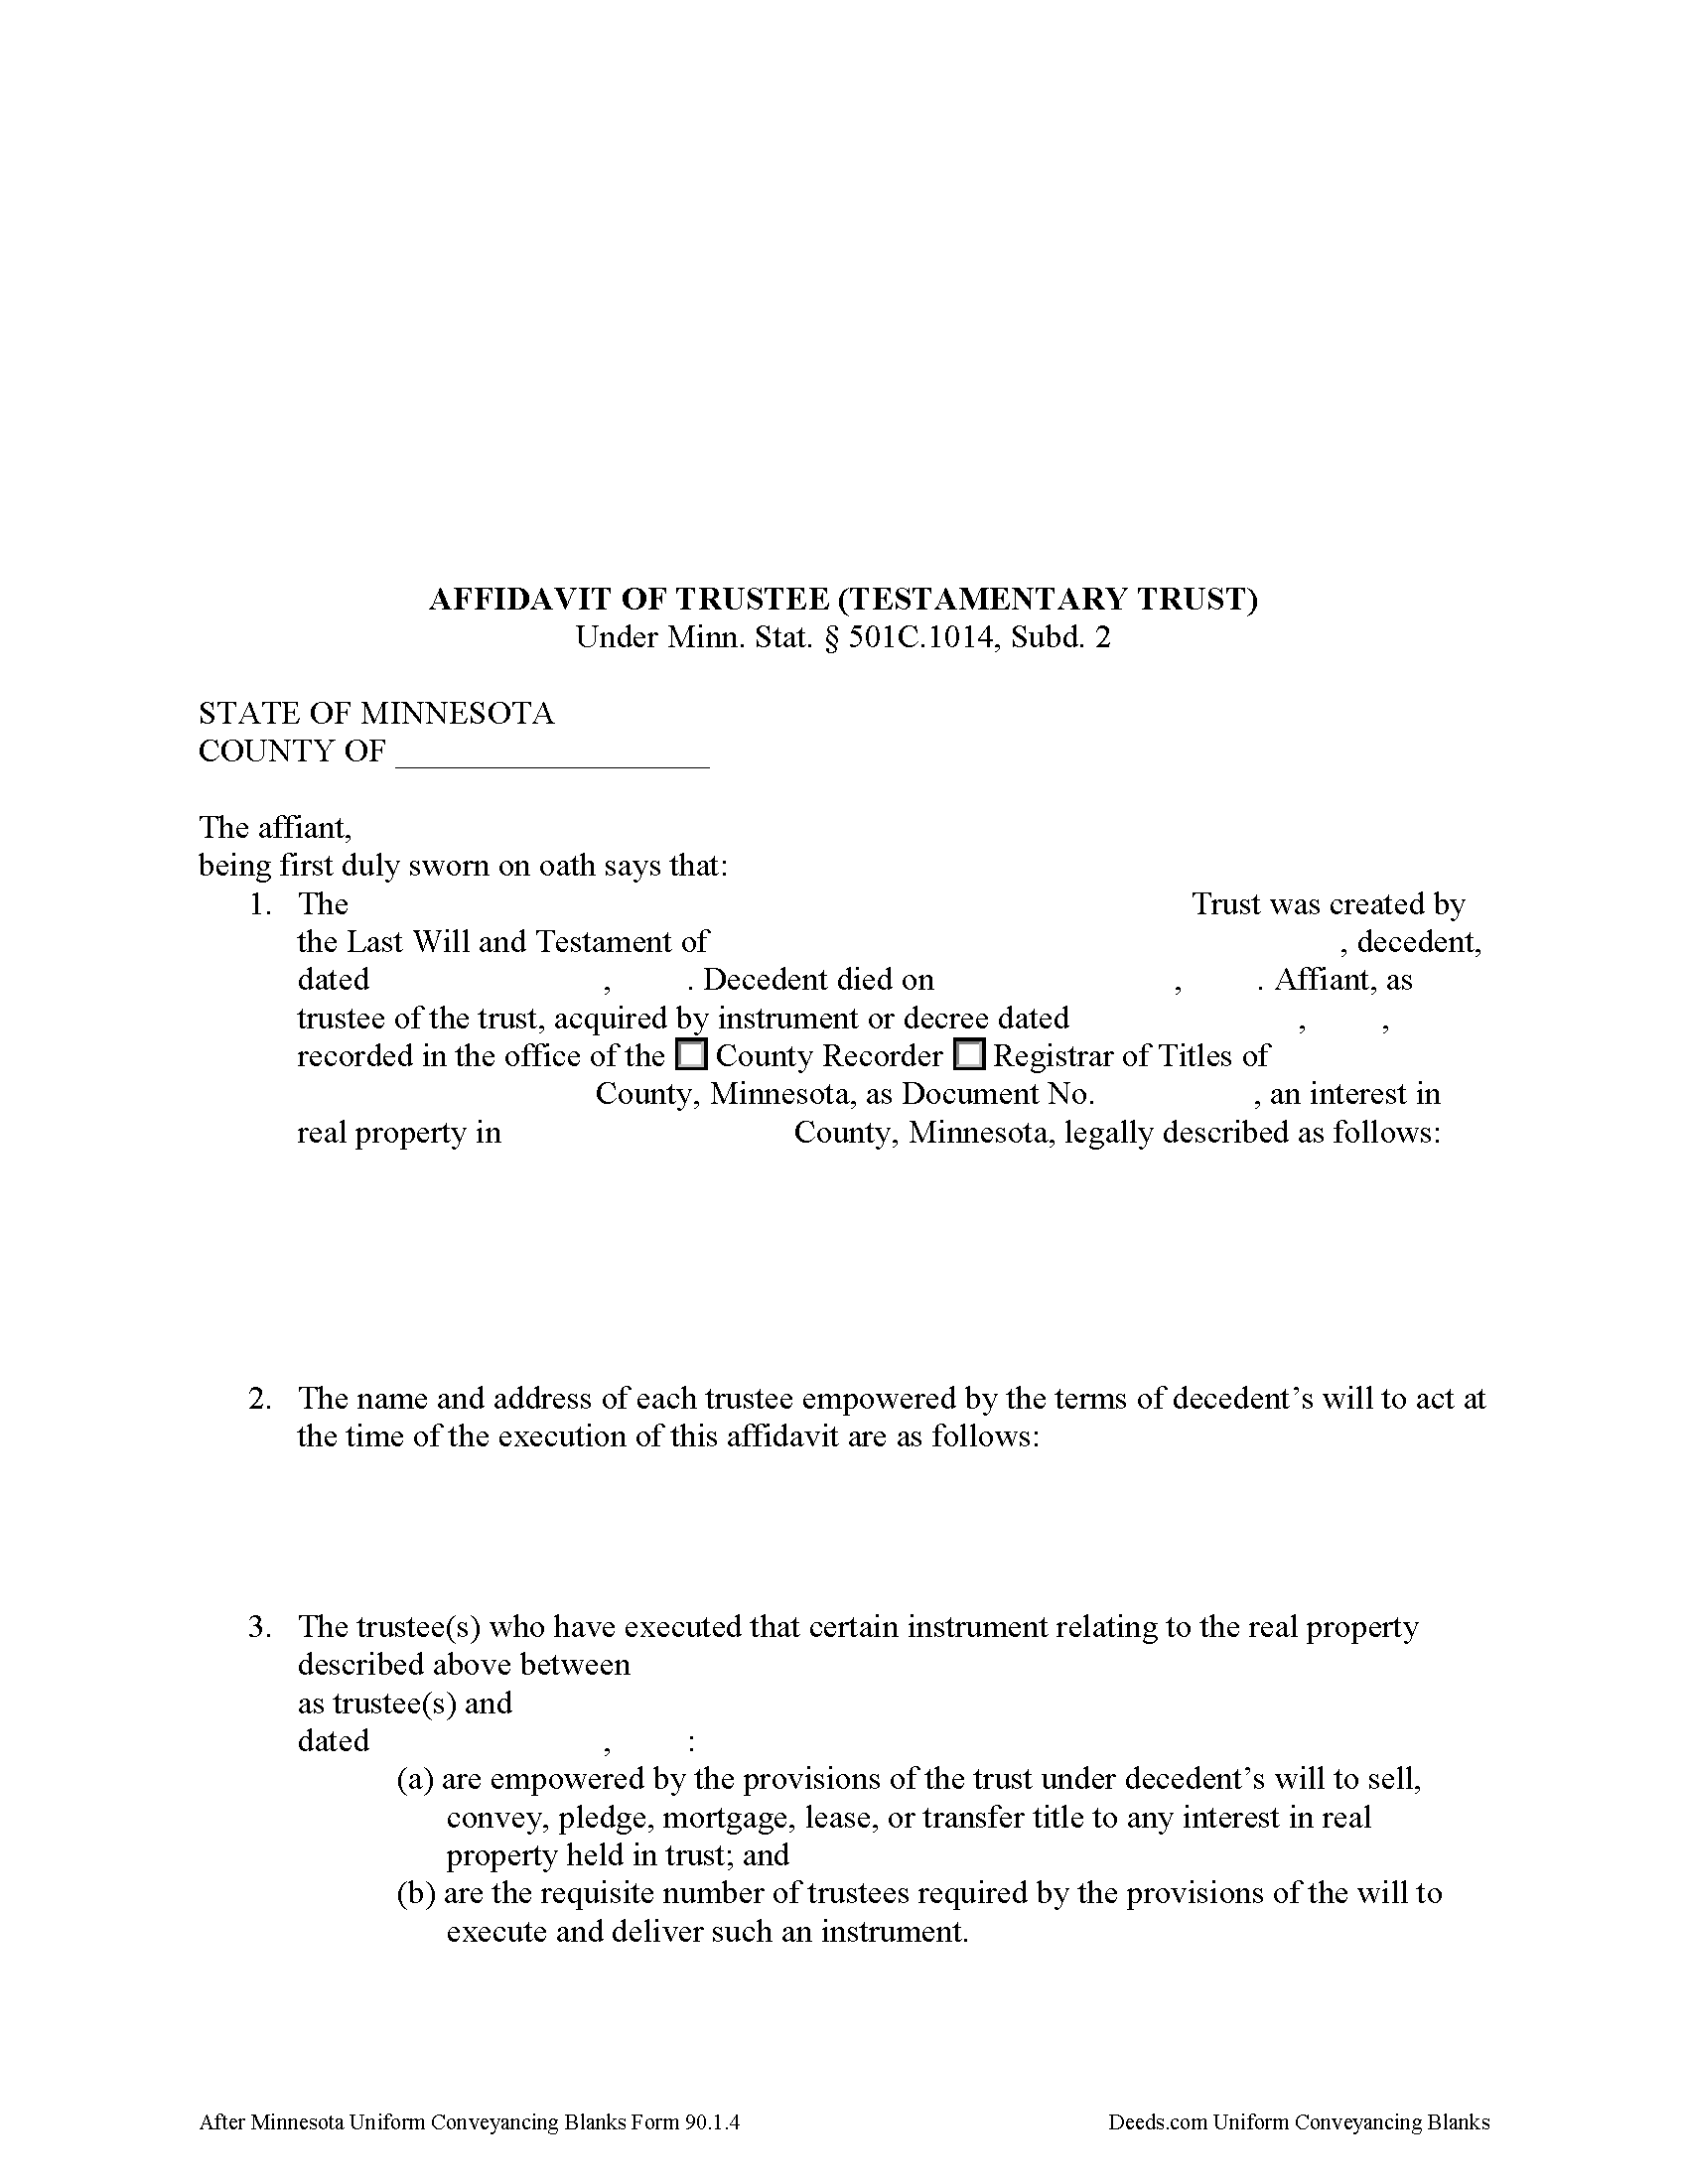 Affidavit of Trustee Form